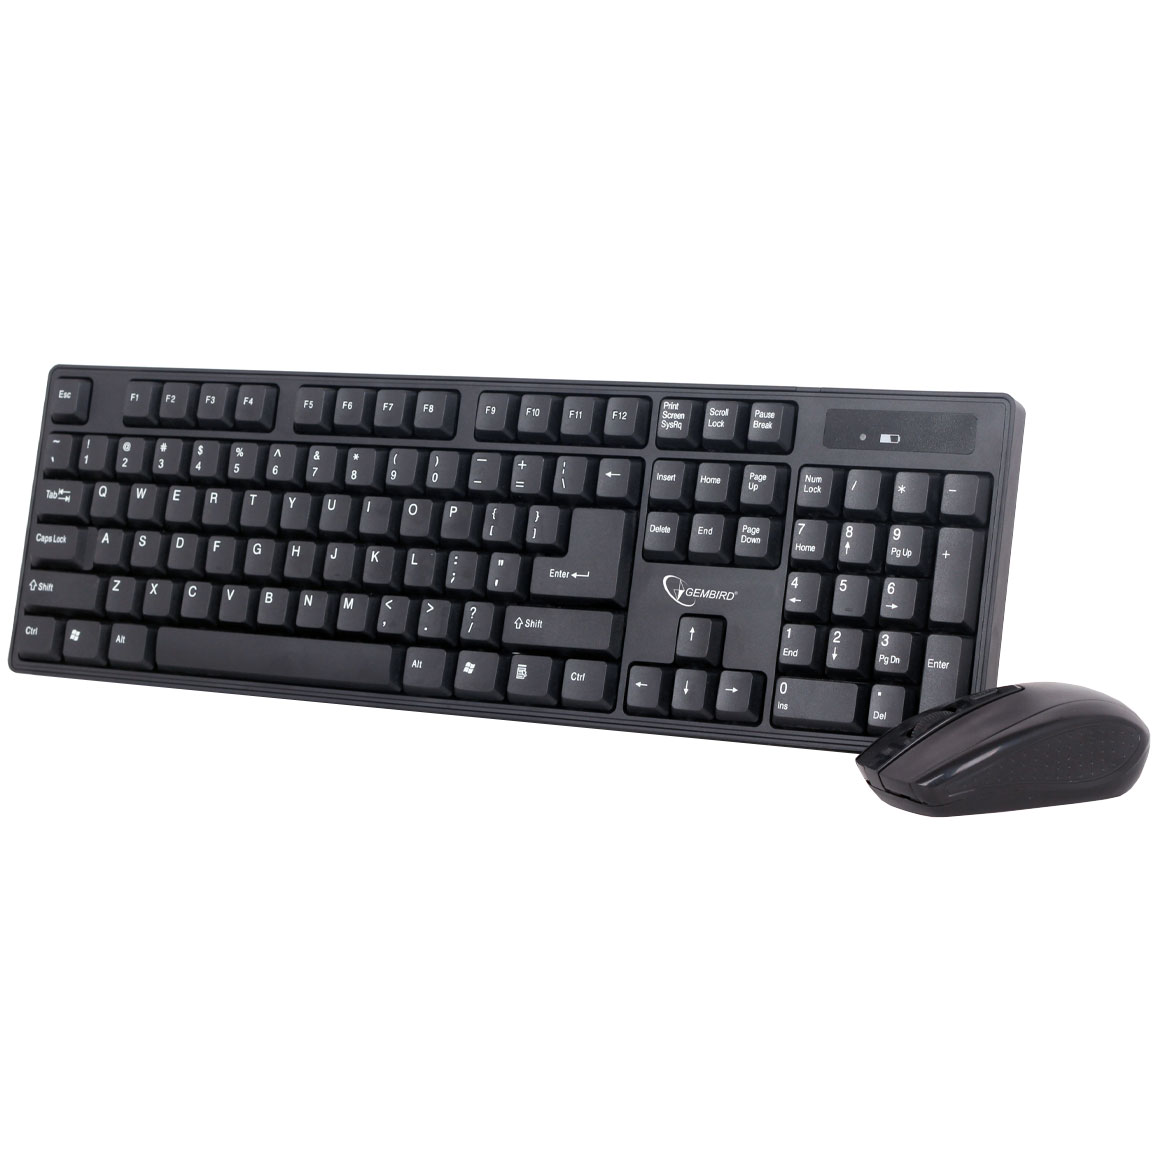 Gembird draadloze QWERTY toetsenbord en muis